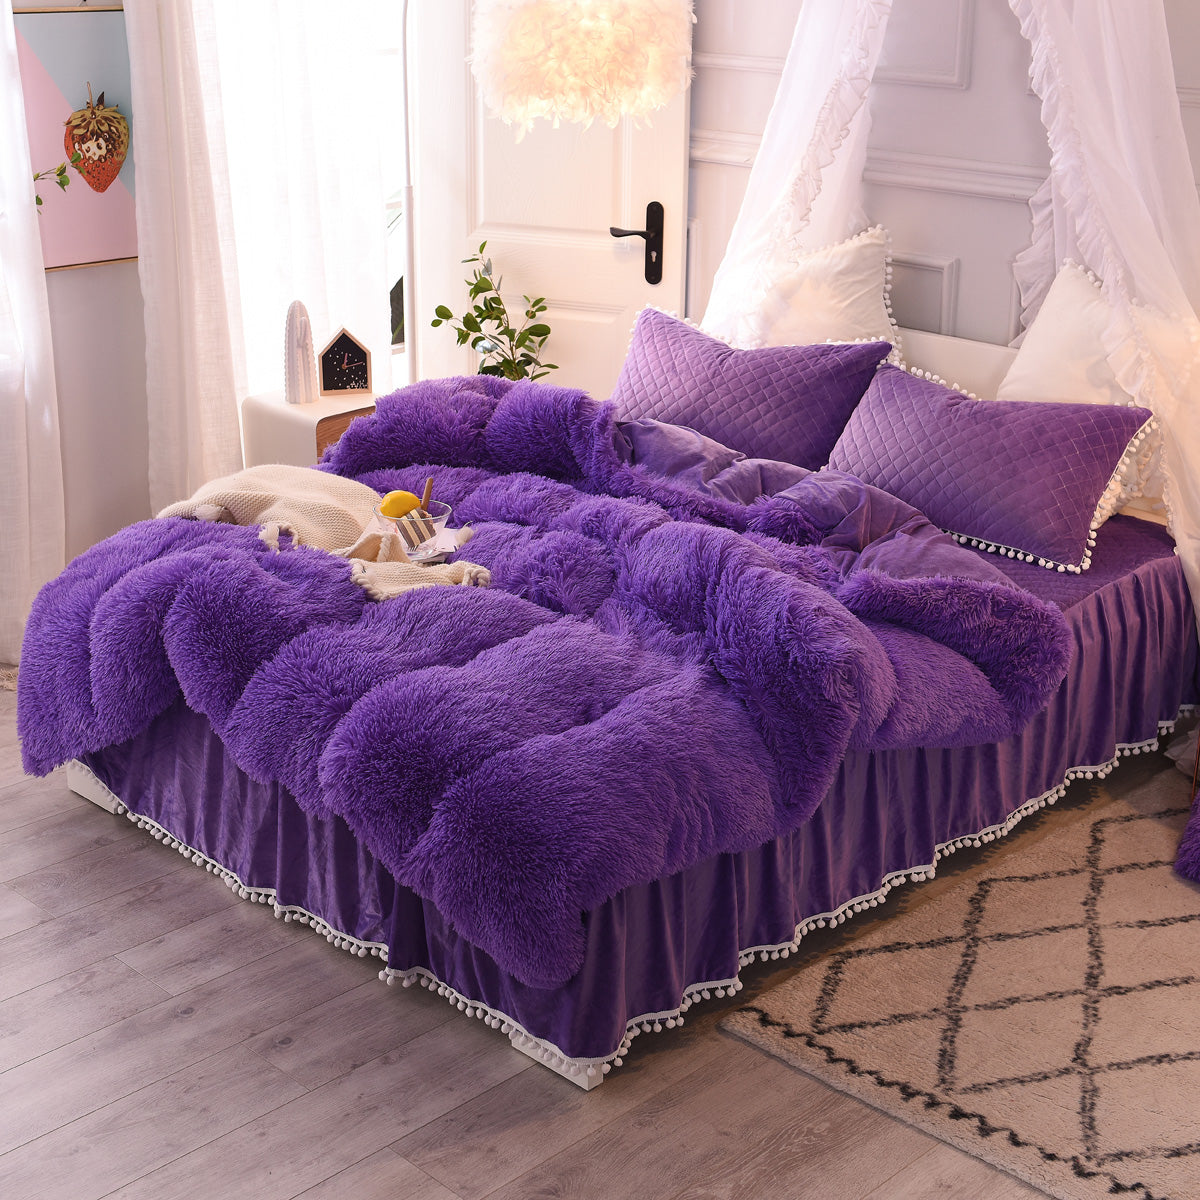 Violet Duvet Cover Set With 2 Pillow Cases